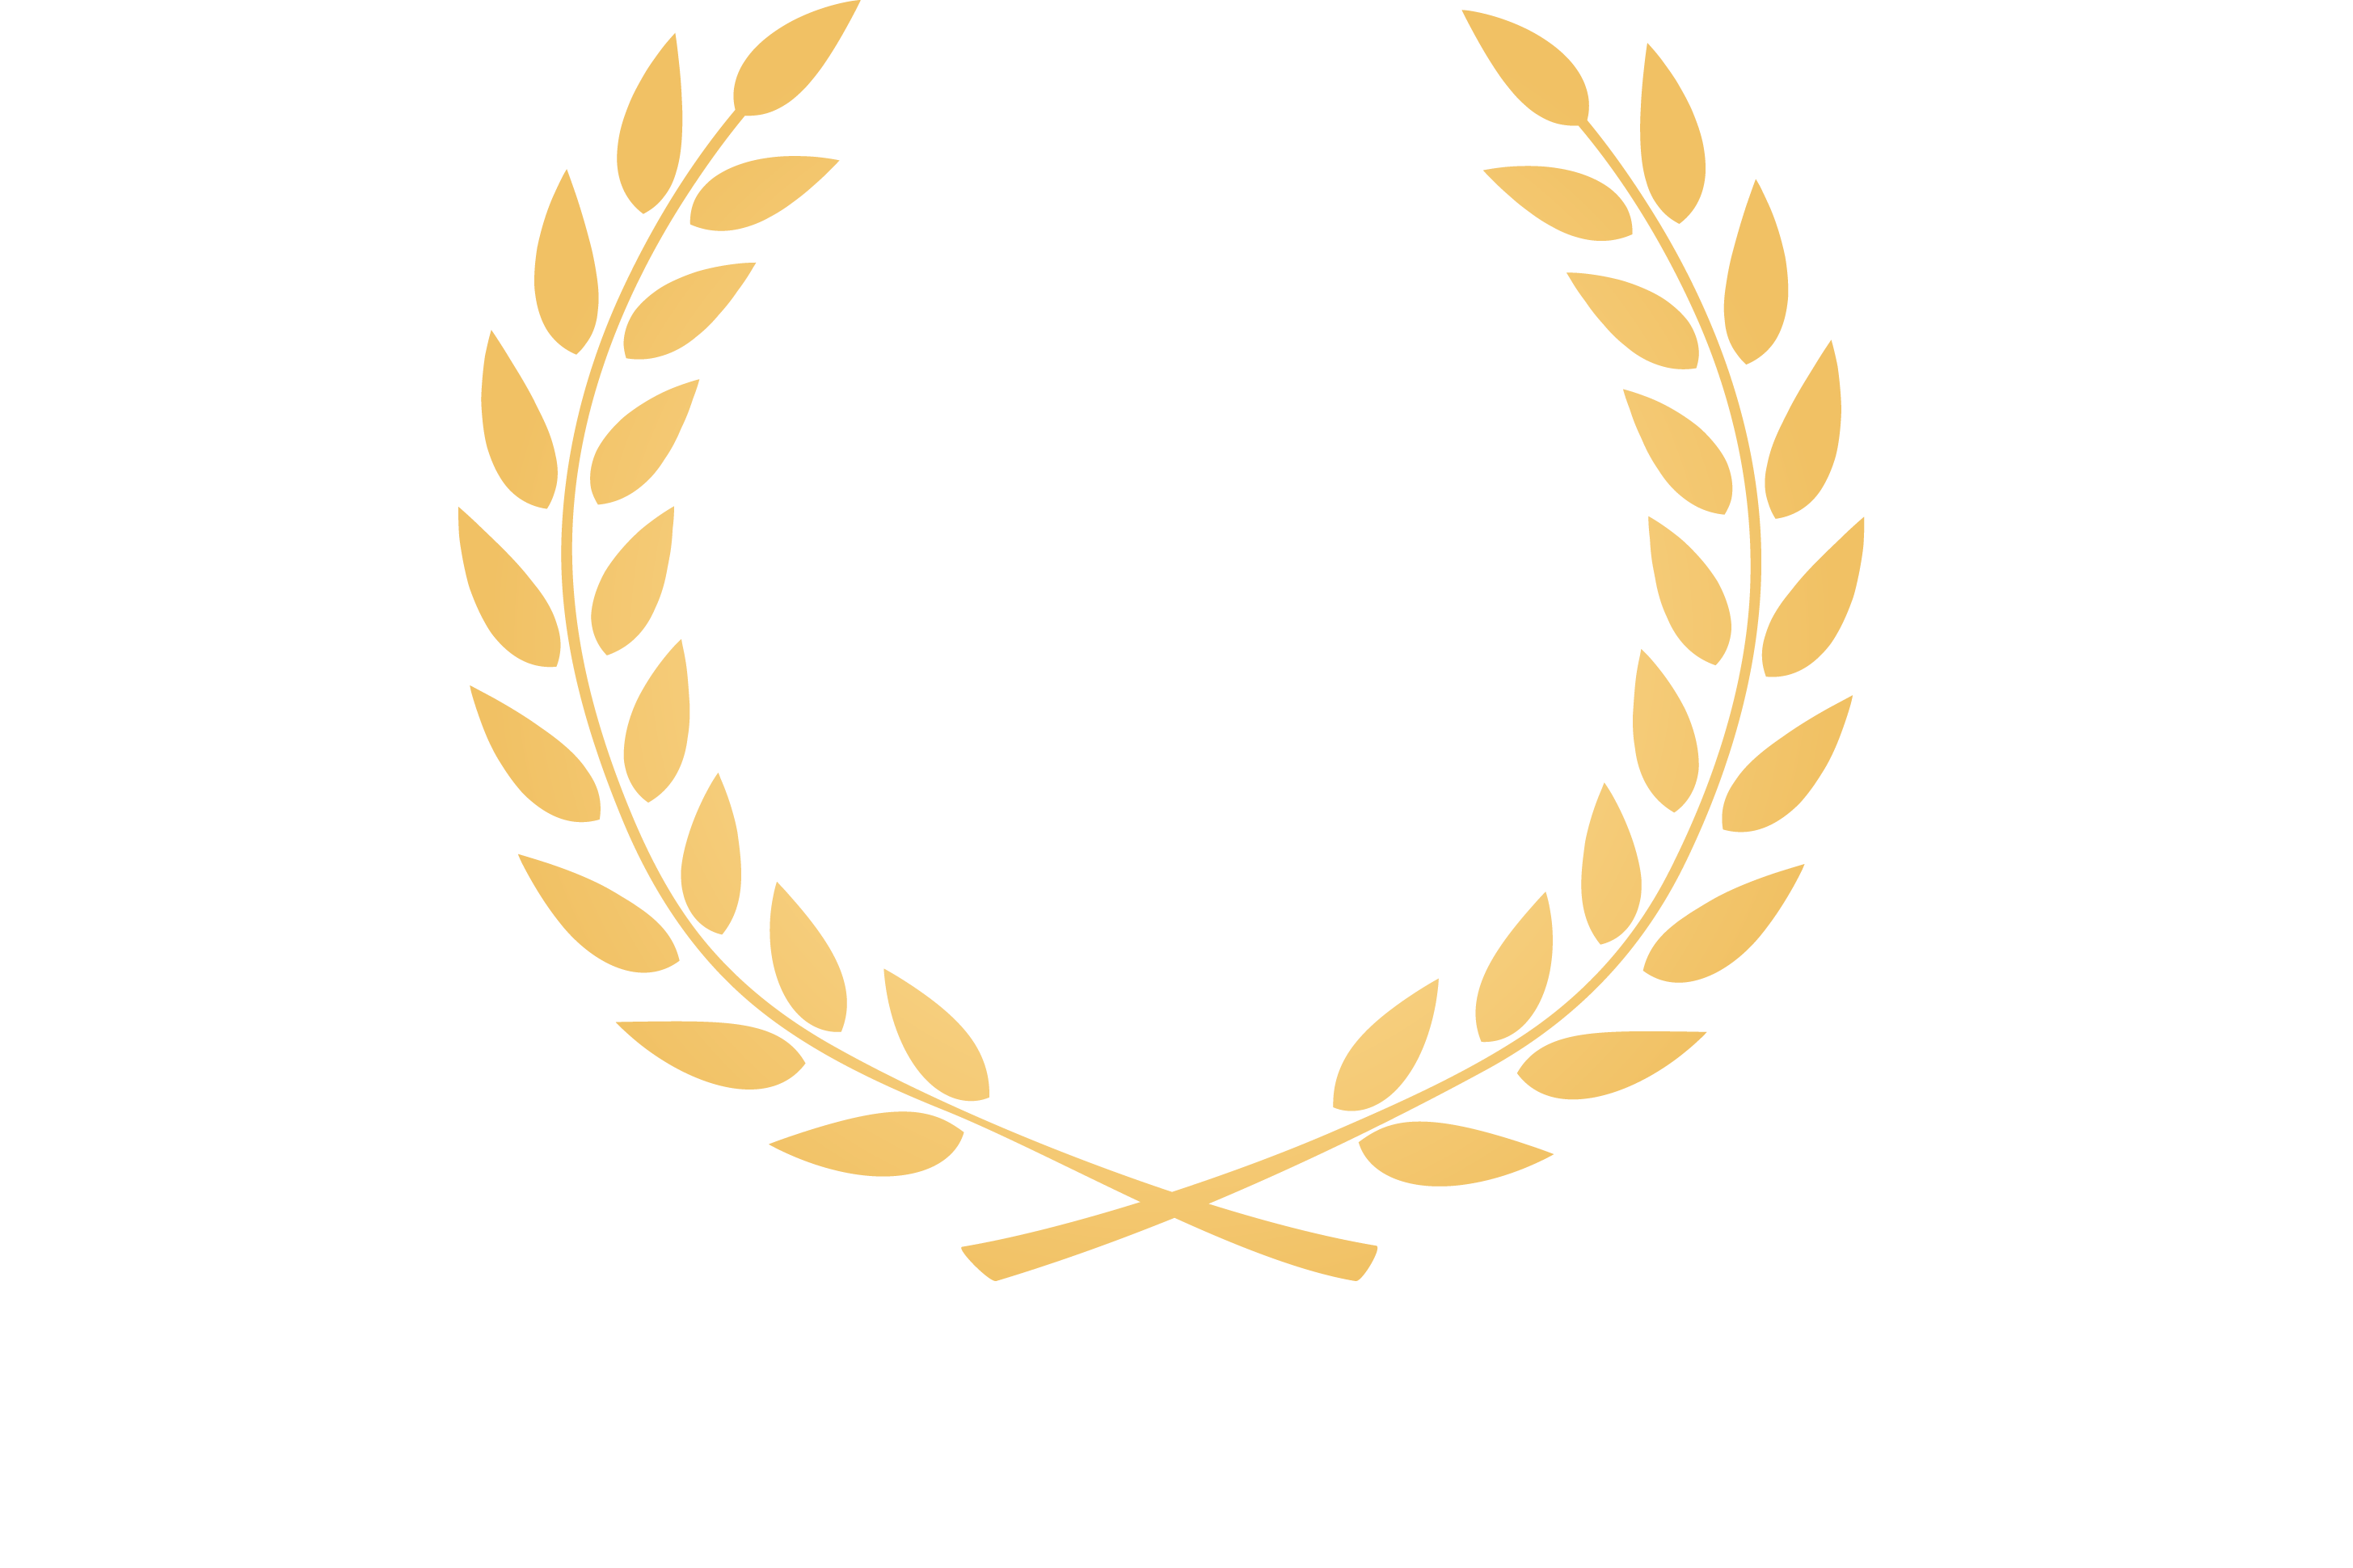 BJ Transportation